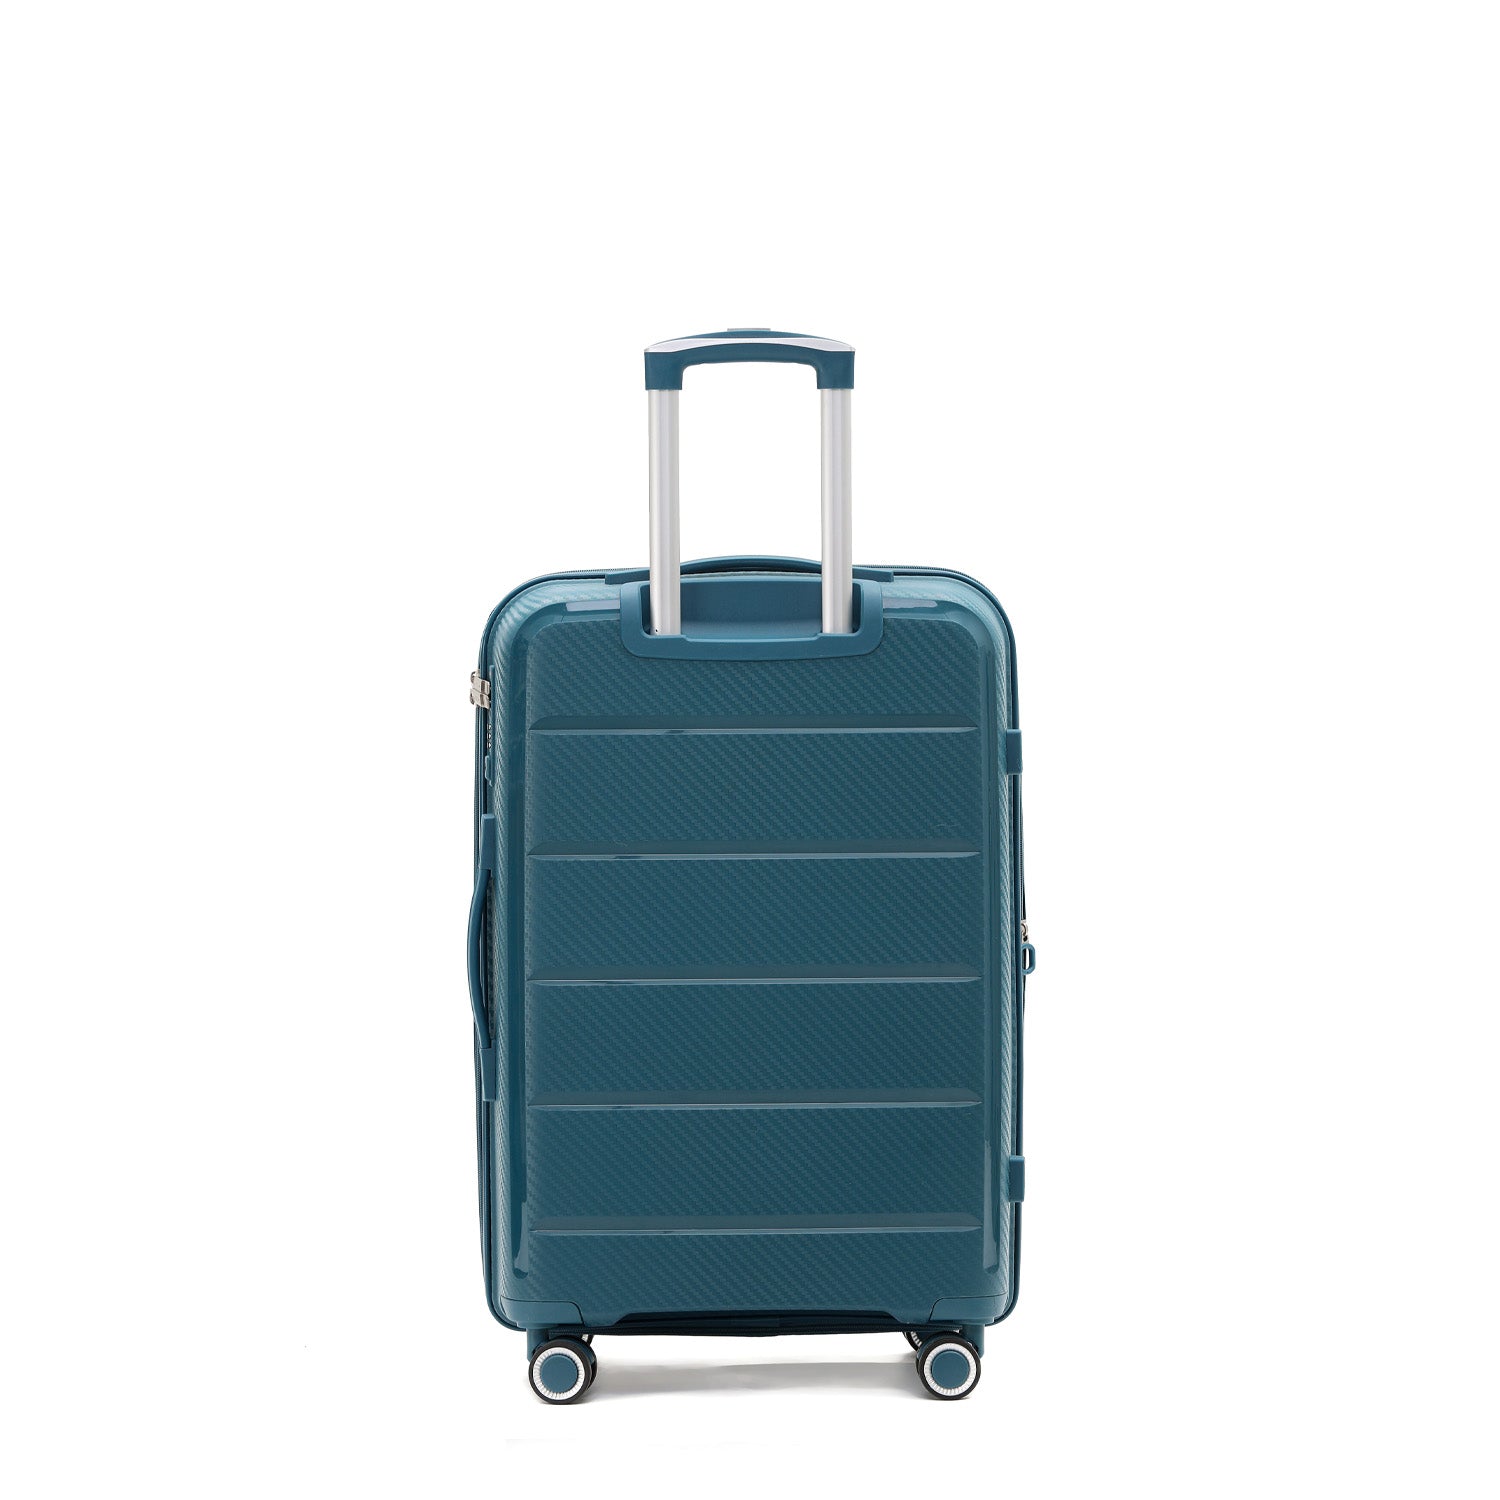 Paklite - PA7350 Medium 65cm spinner suitcase - Blue - 0